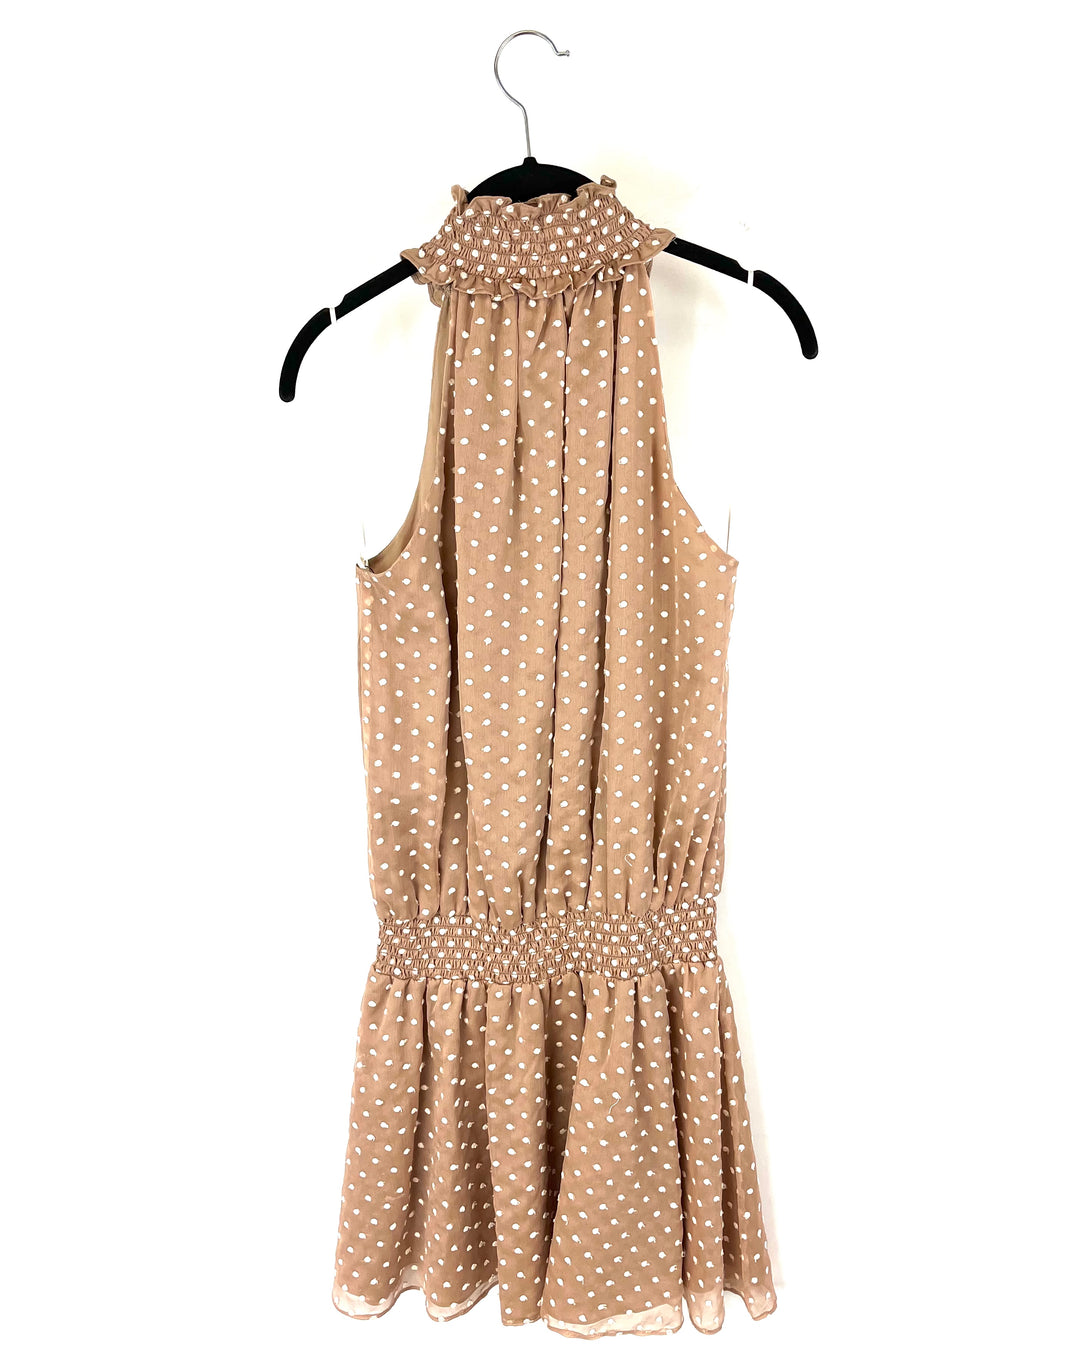 Beige Polka Dot Sleeveless Mini Dress - Size 4-6